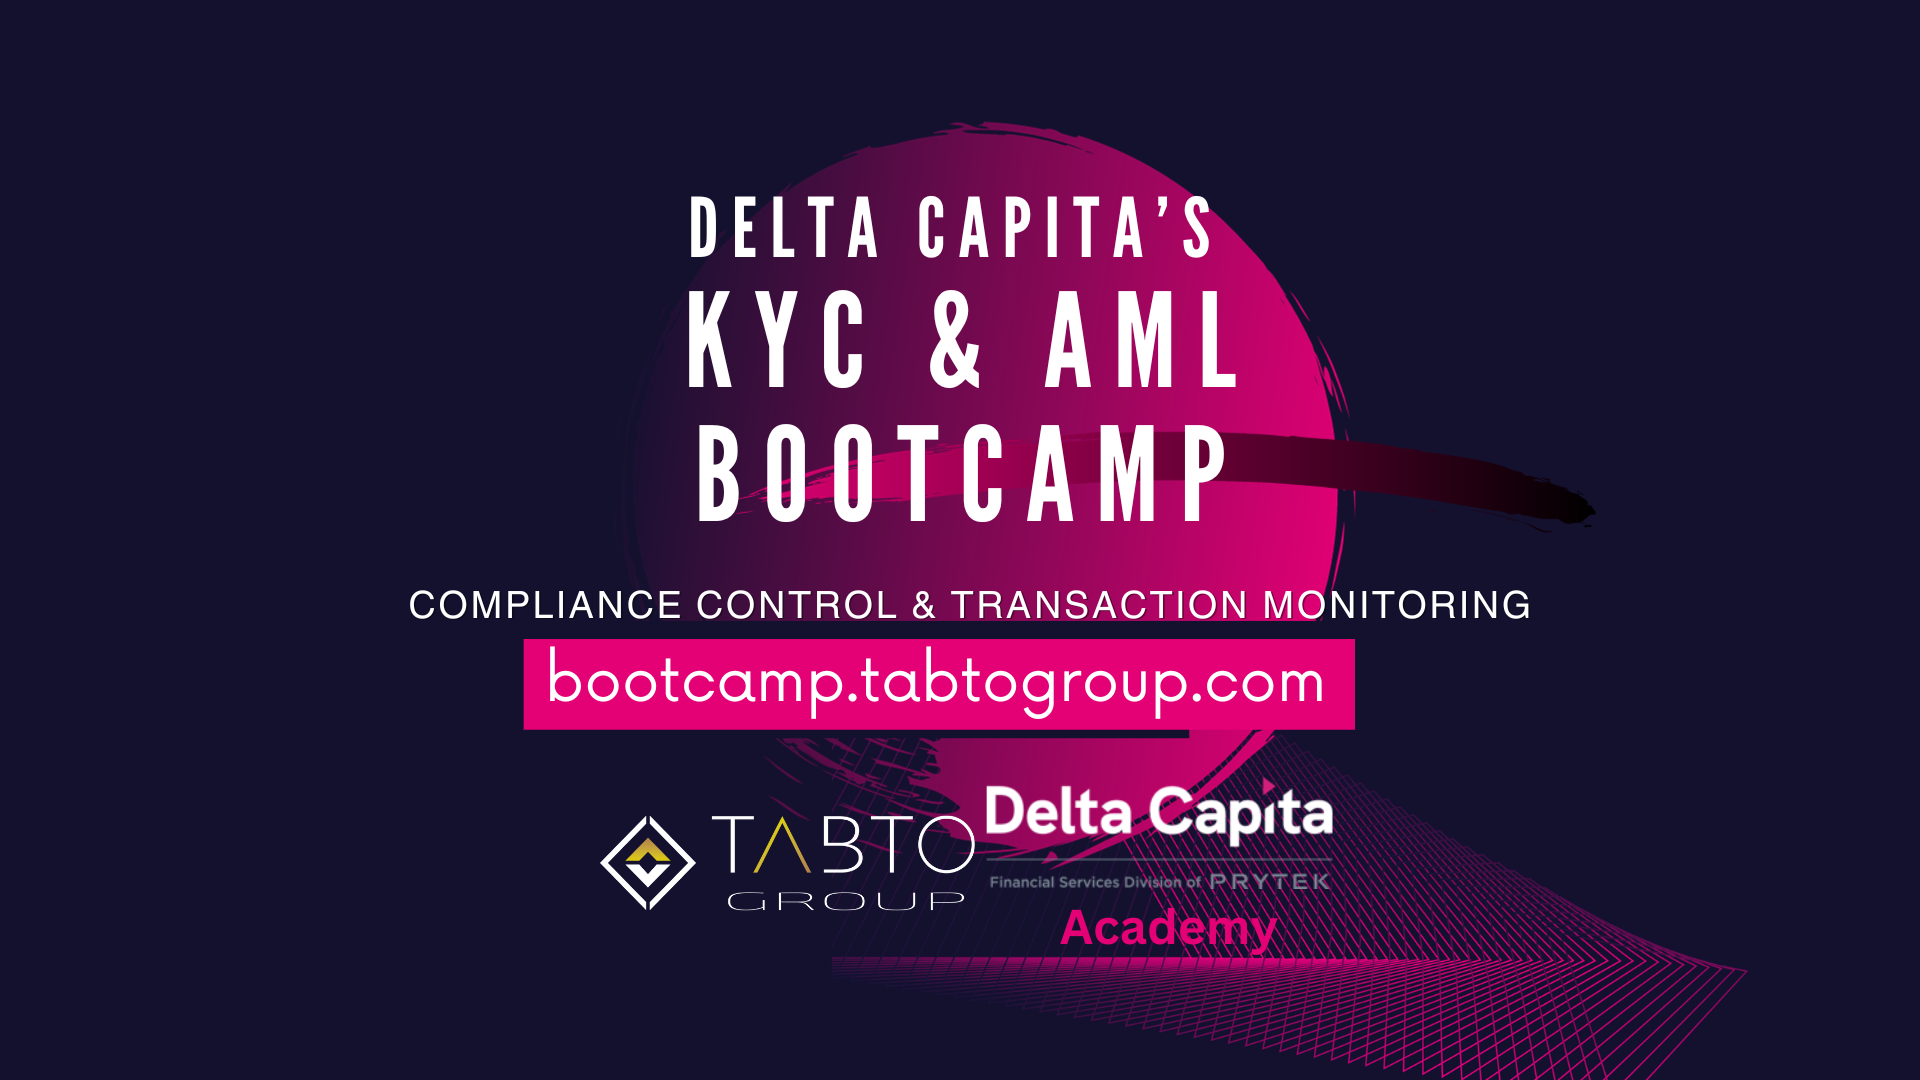 Delta Capita's KYC & AML Bootcamp: Compliance Control & Transaction Monitoring